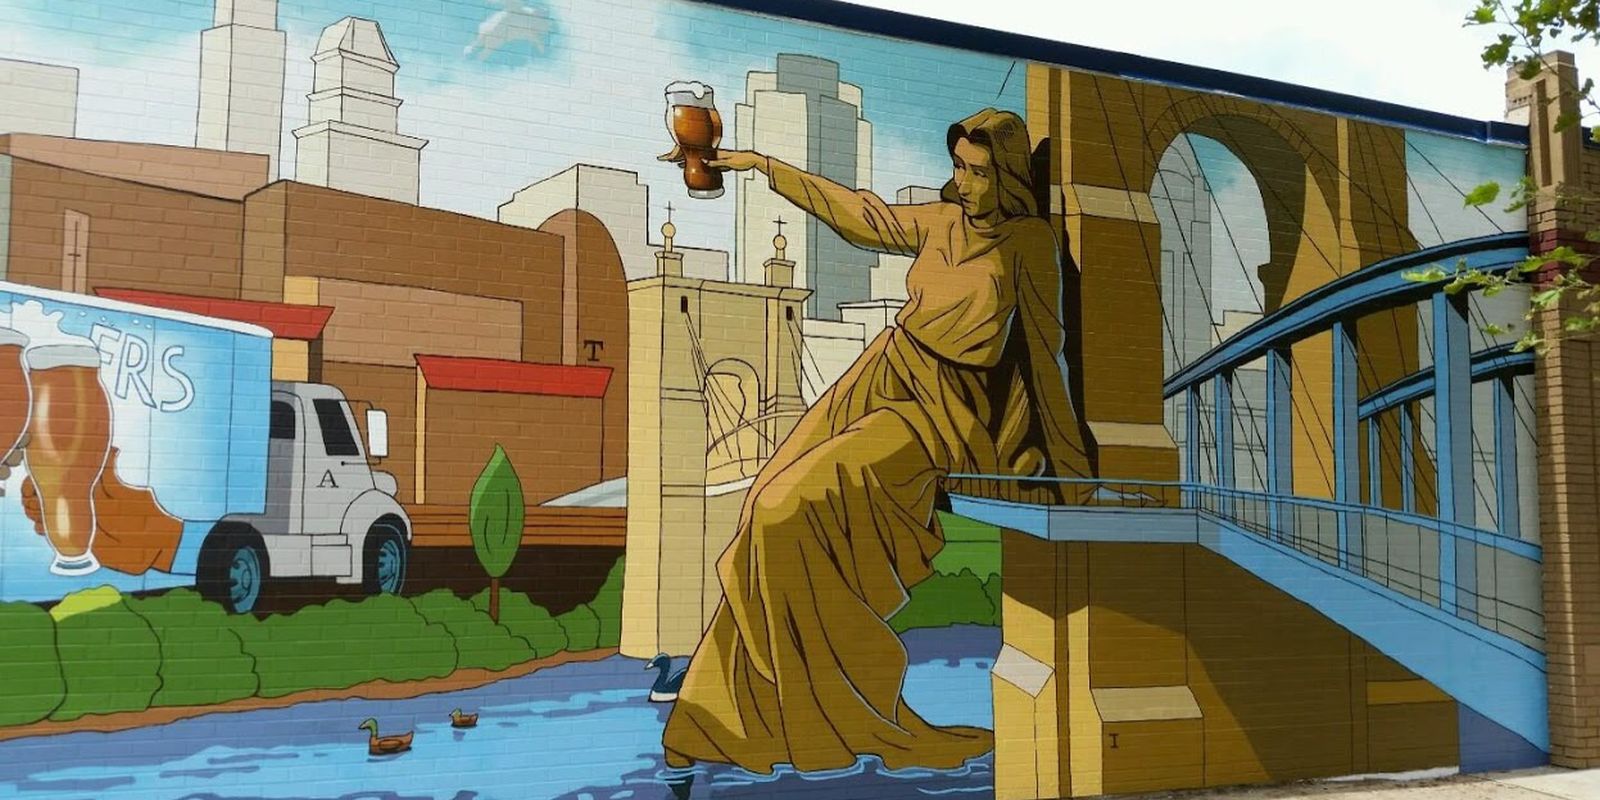 Samuel Adams Brewery Mural - Cincinnati Ohio